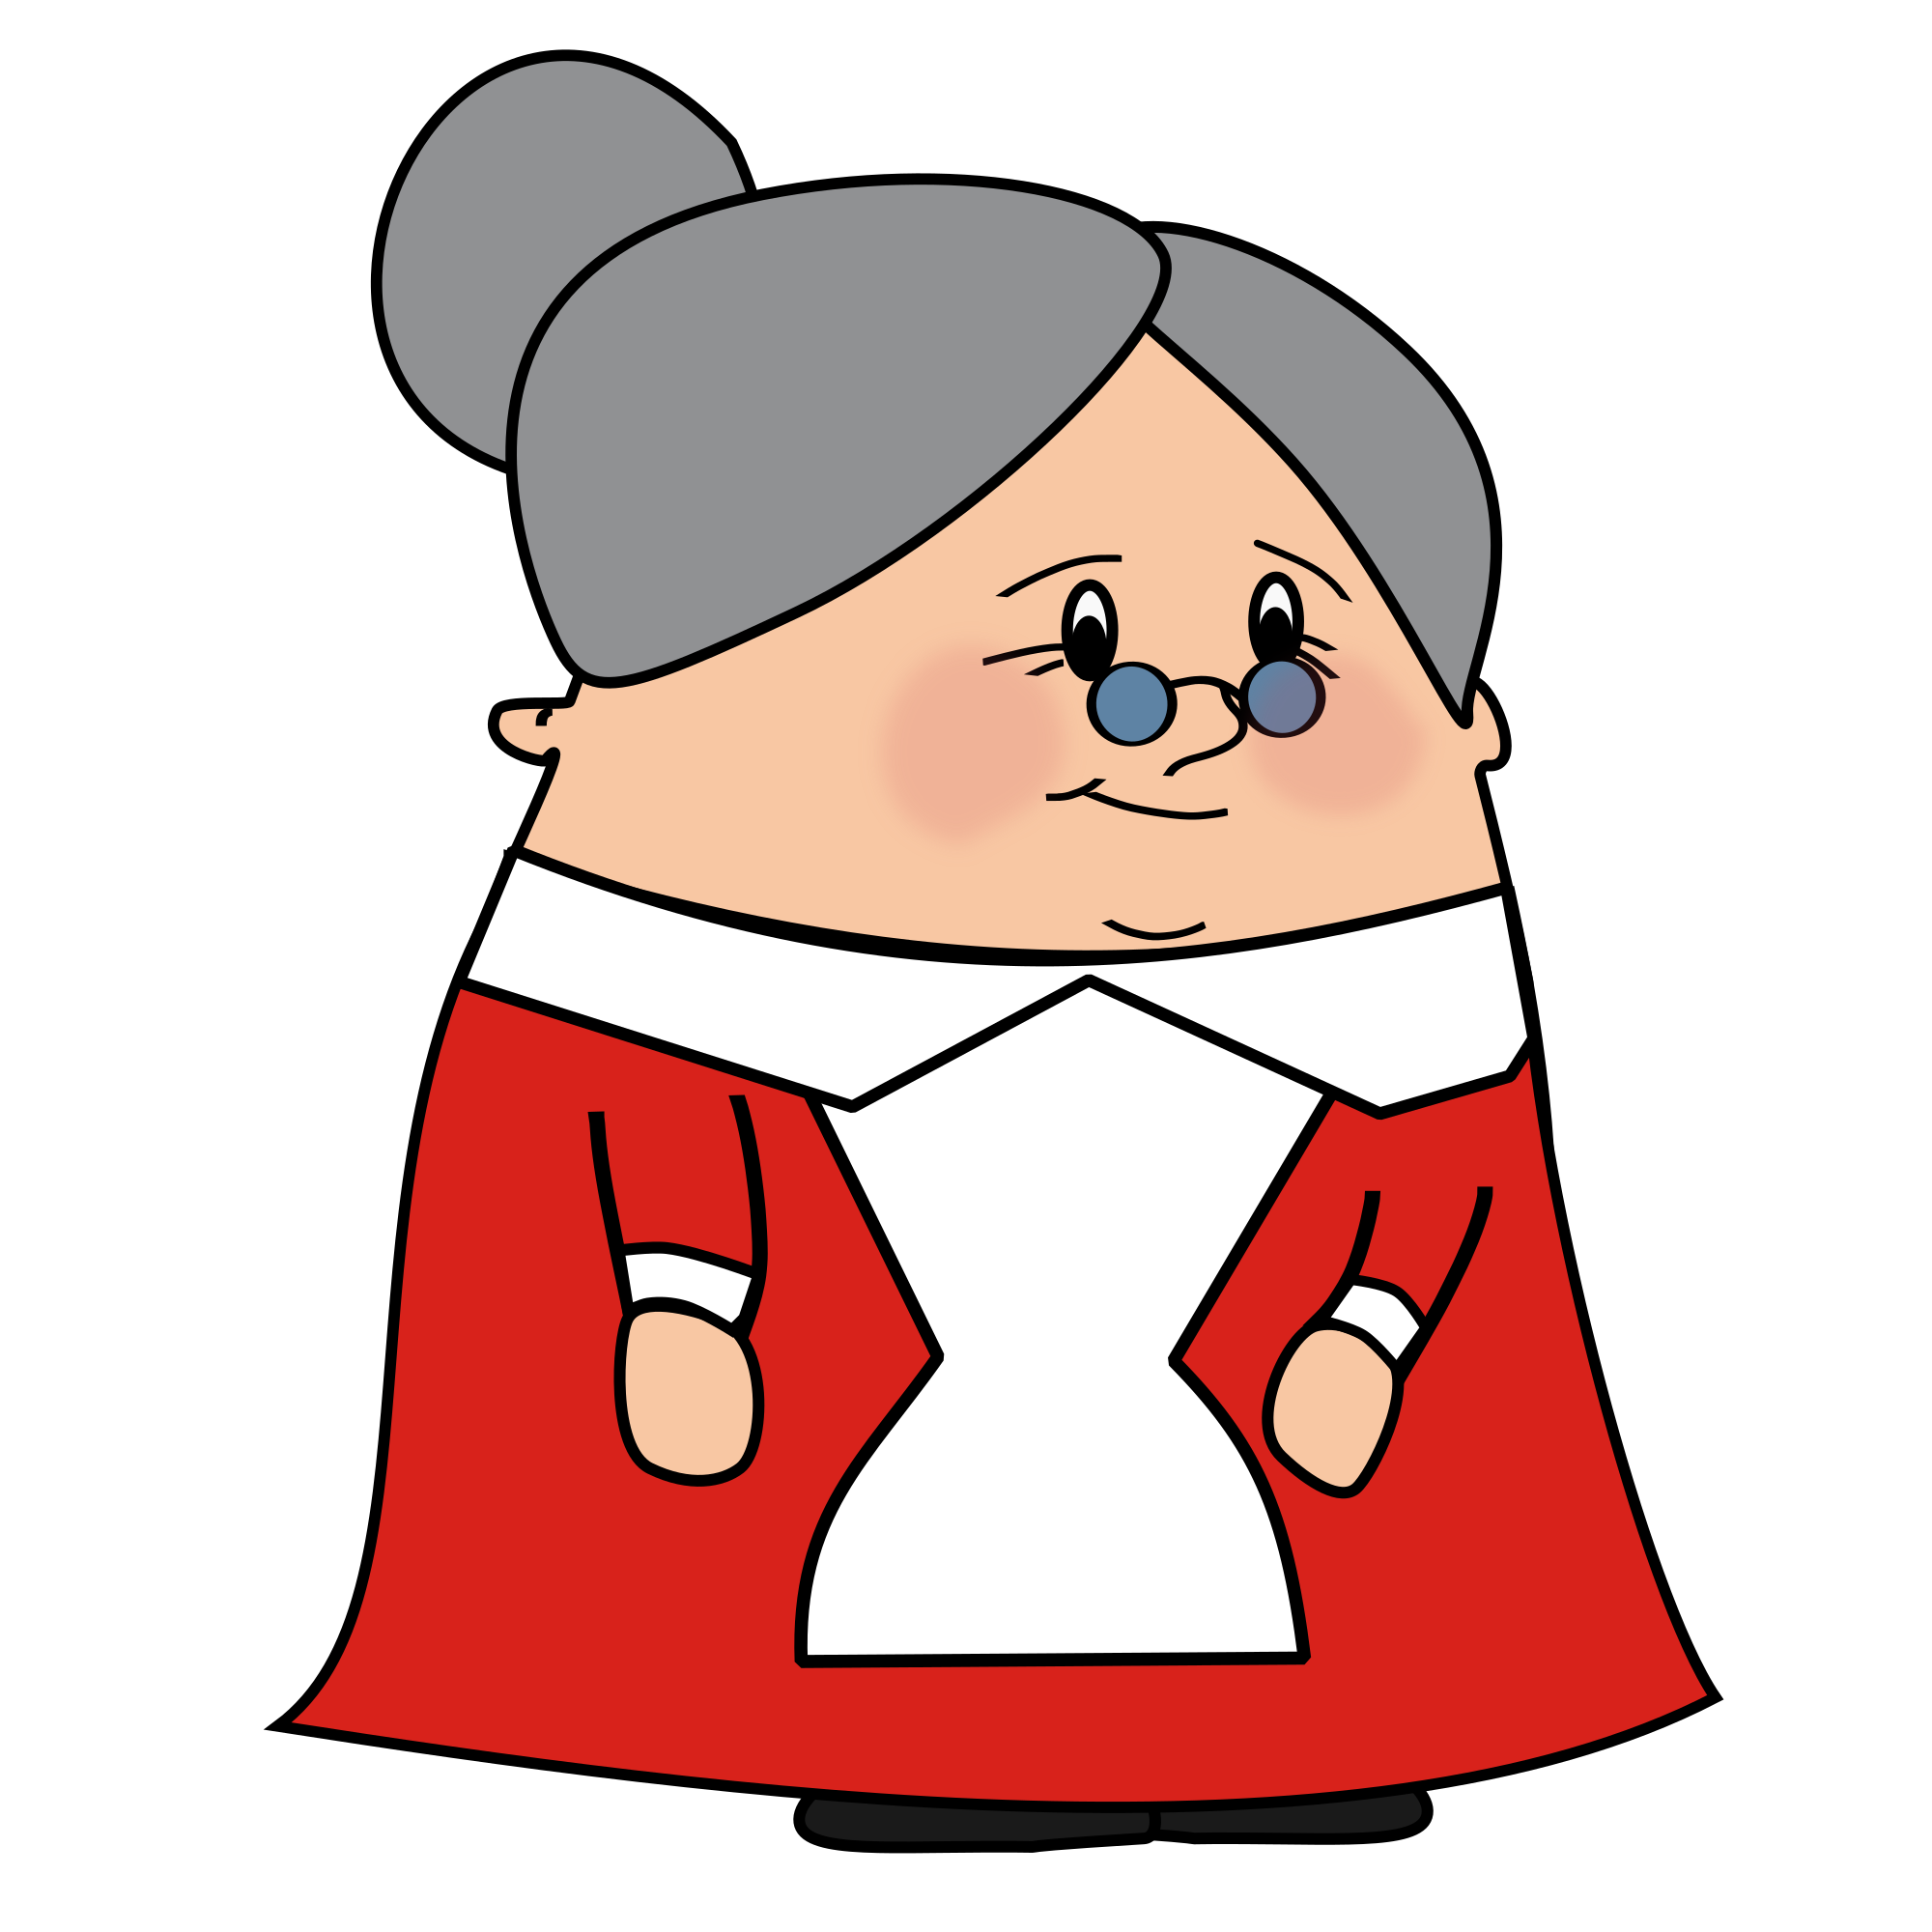 Illustration of Mrs. Claus